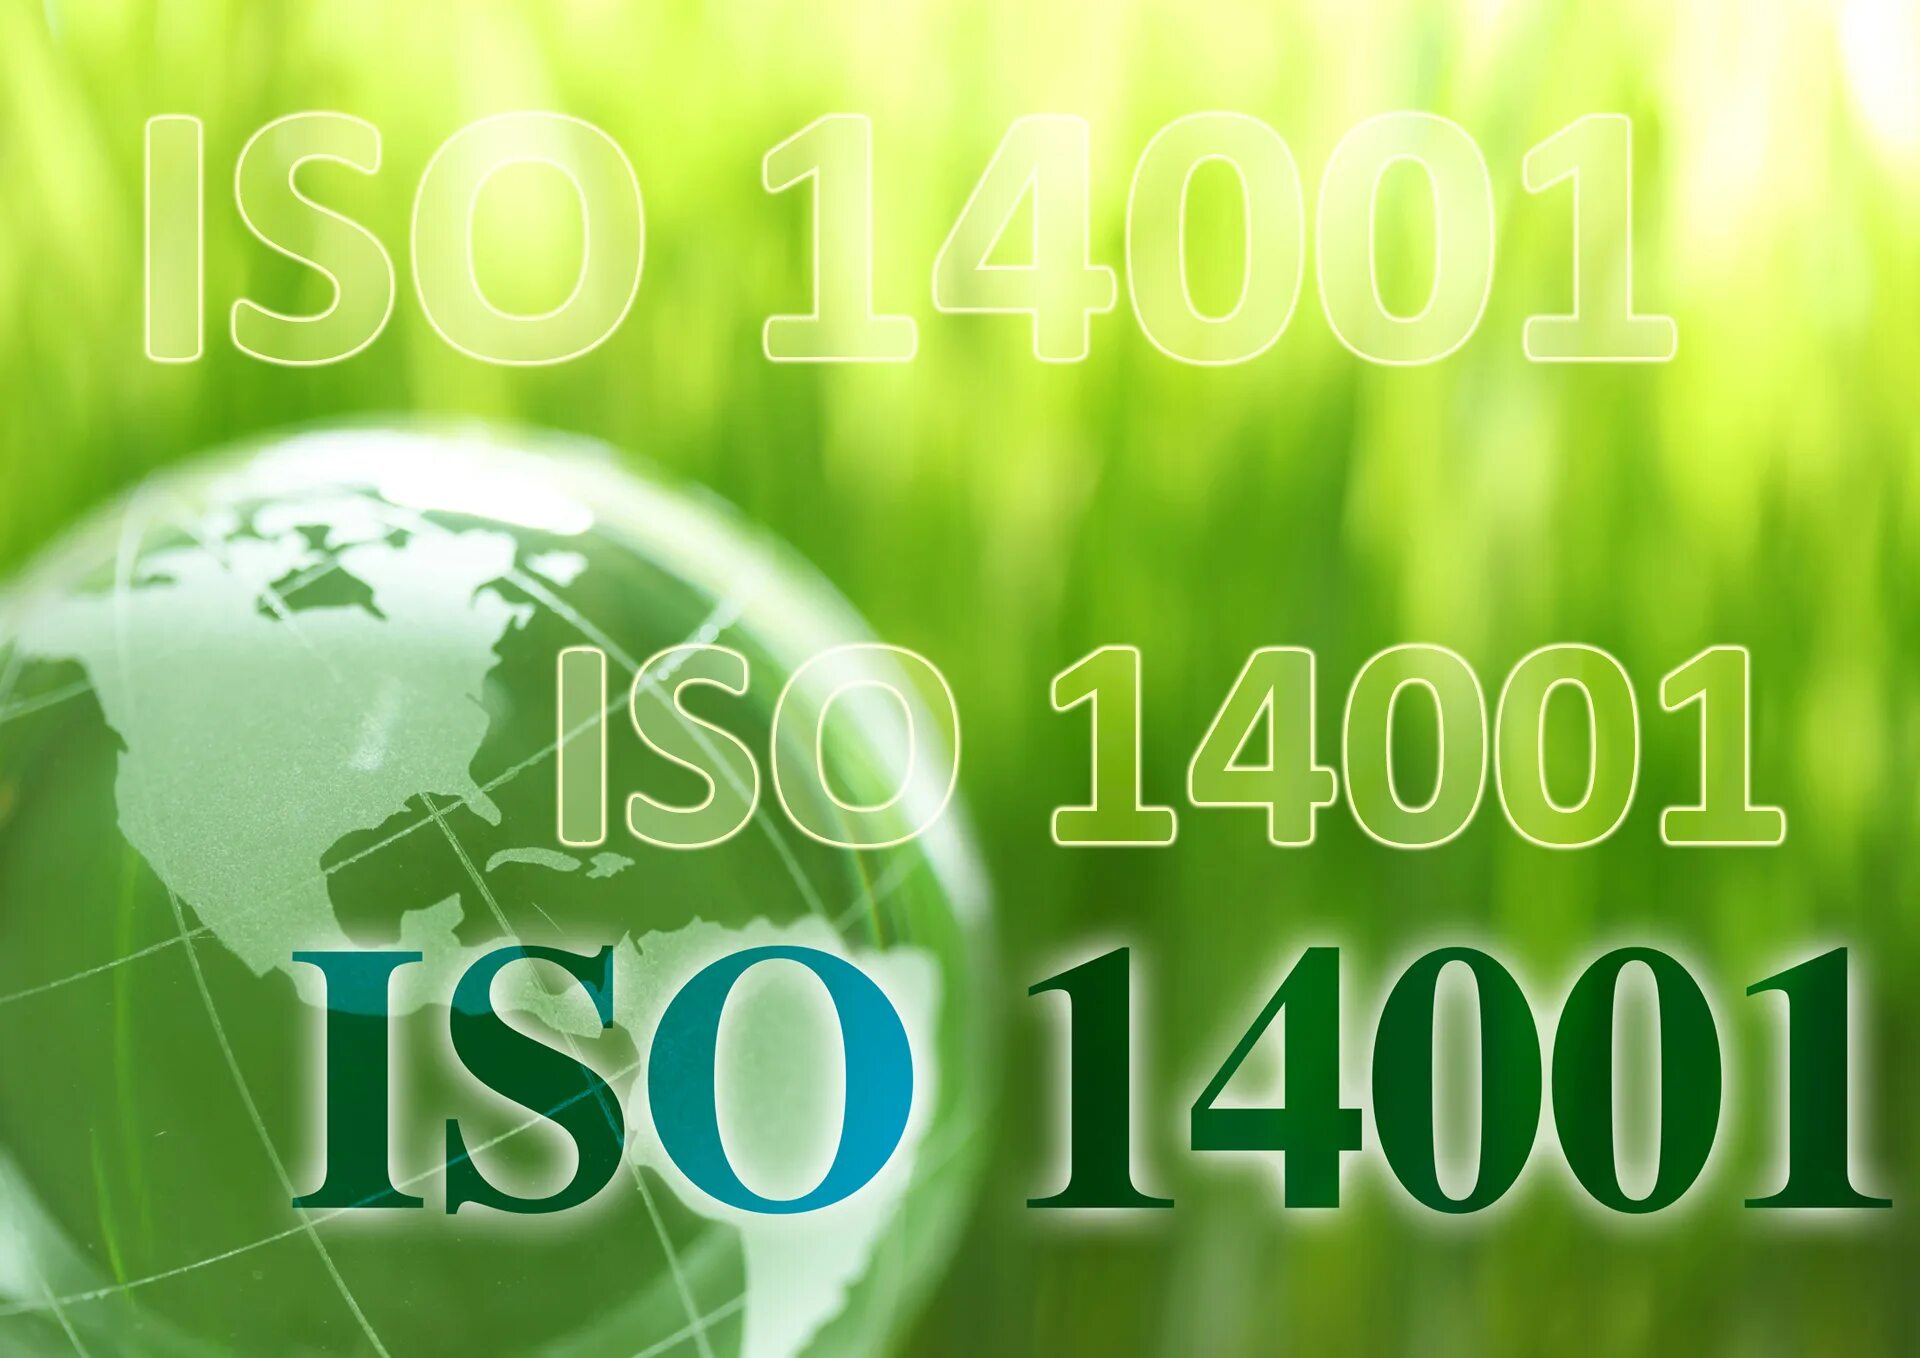 Исо 14001 документация. Международные стандарты ИСО ISO 14001. Международный стандарт ISO 14001. Standard ISO 14001.. ISO 14001 картинка.